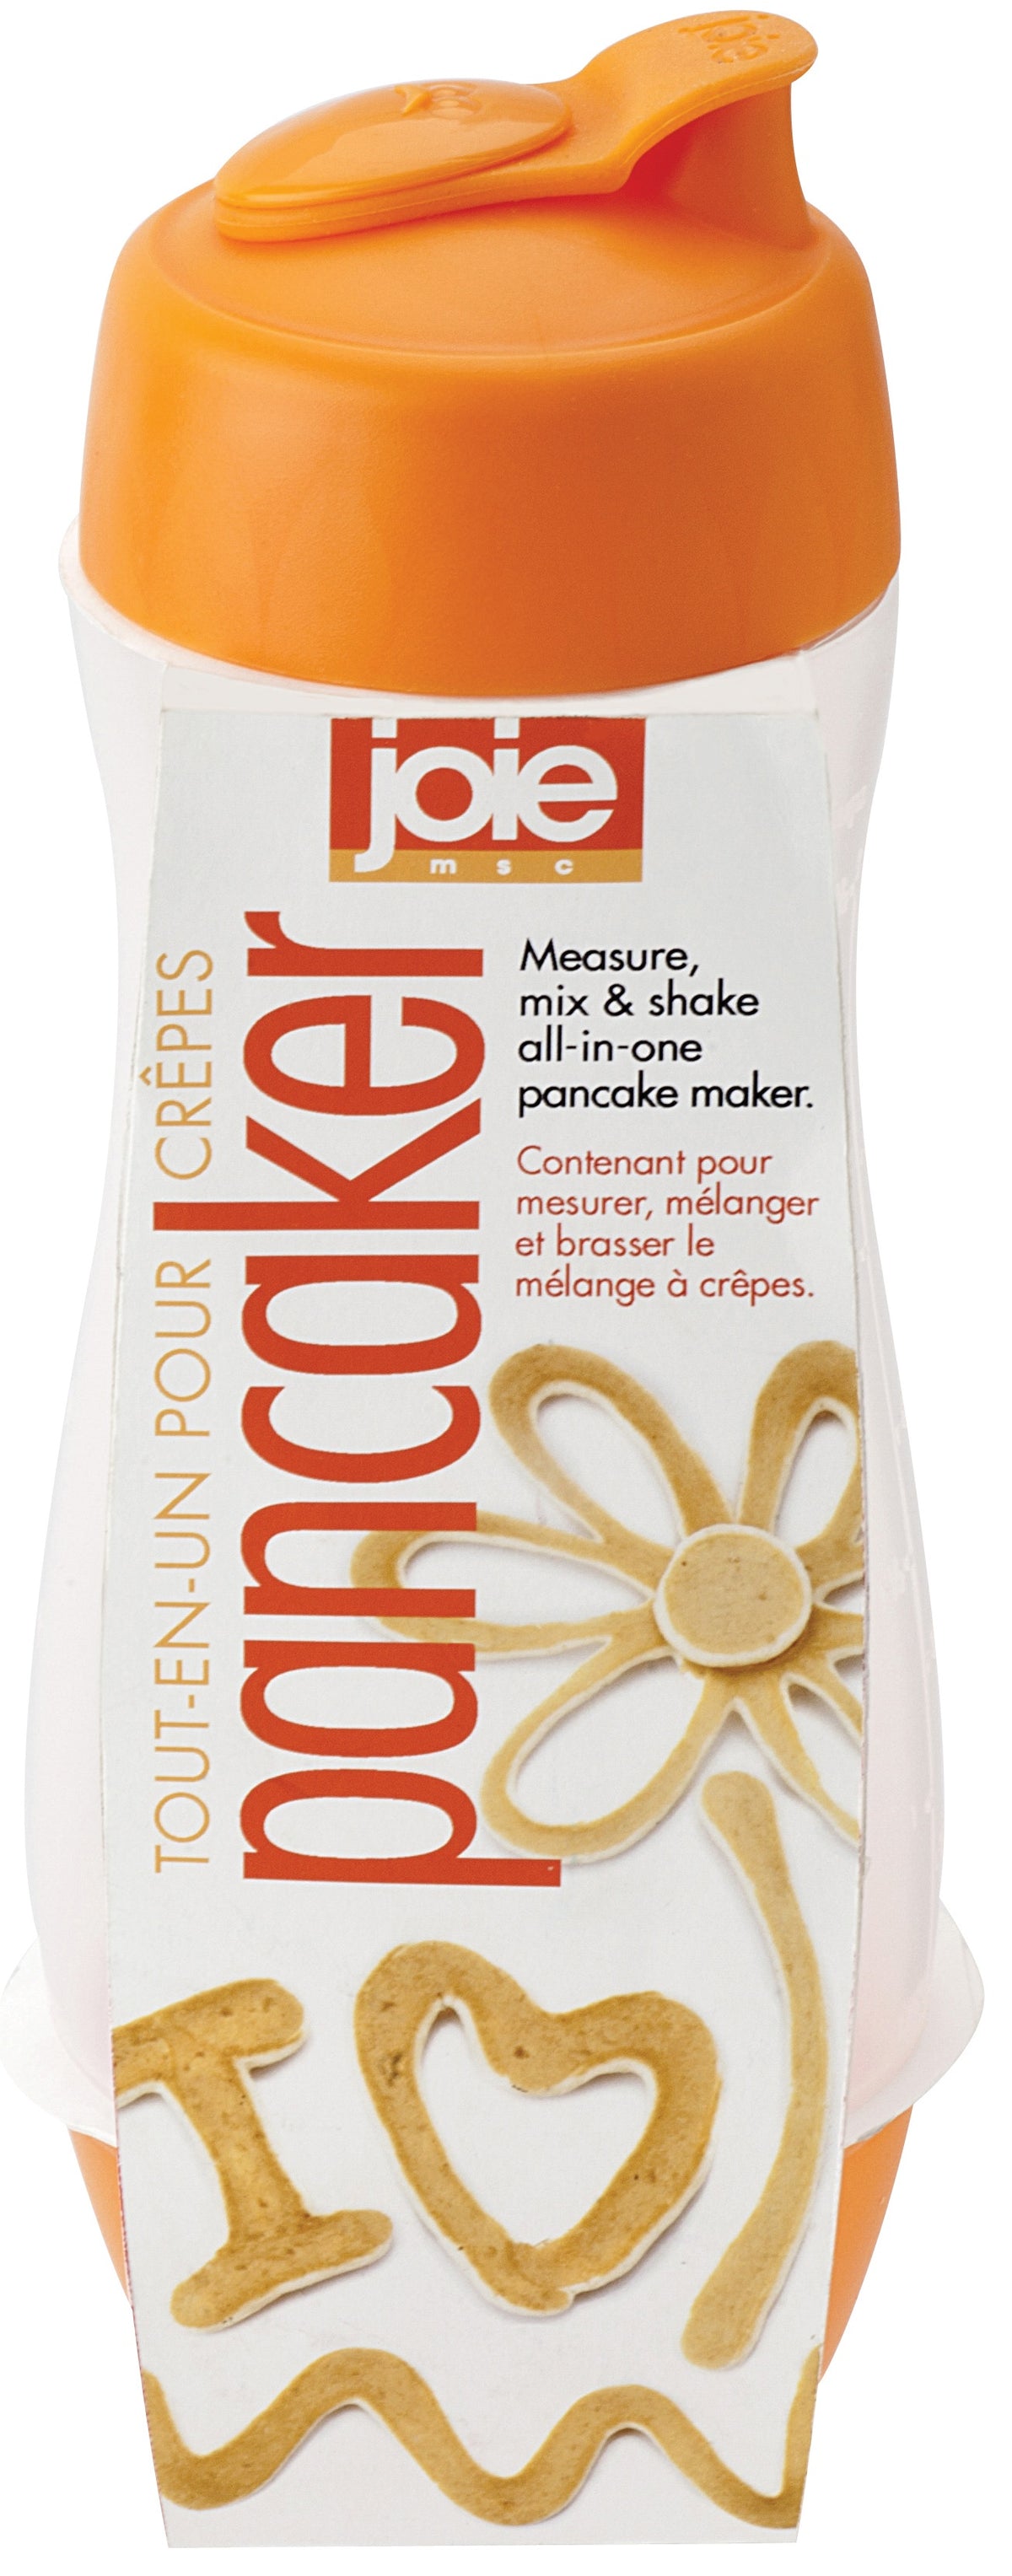 Joie MSC 50993 Pancaker Mix Bottle, Plastic